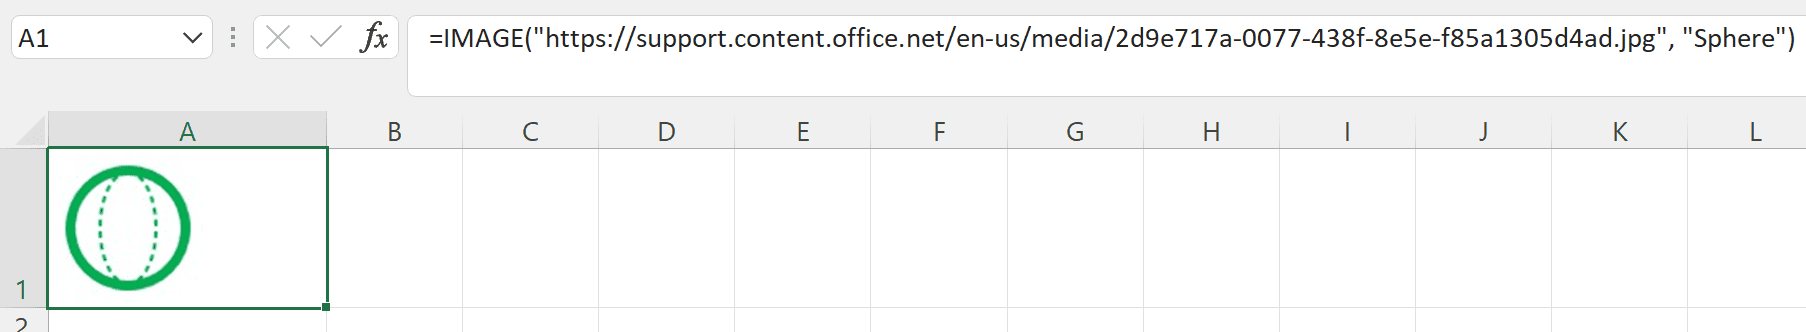 Microsoft Excel ให้คุณแทรกรูปภาพในเซลล์ได้แล้ว